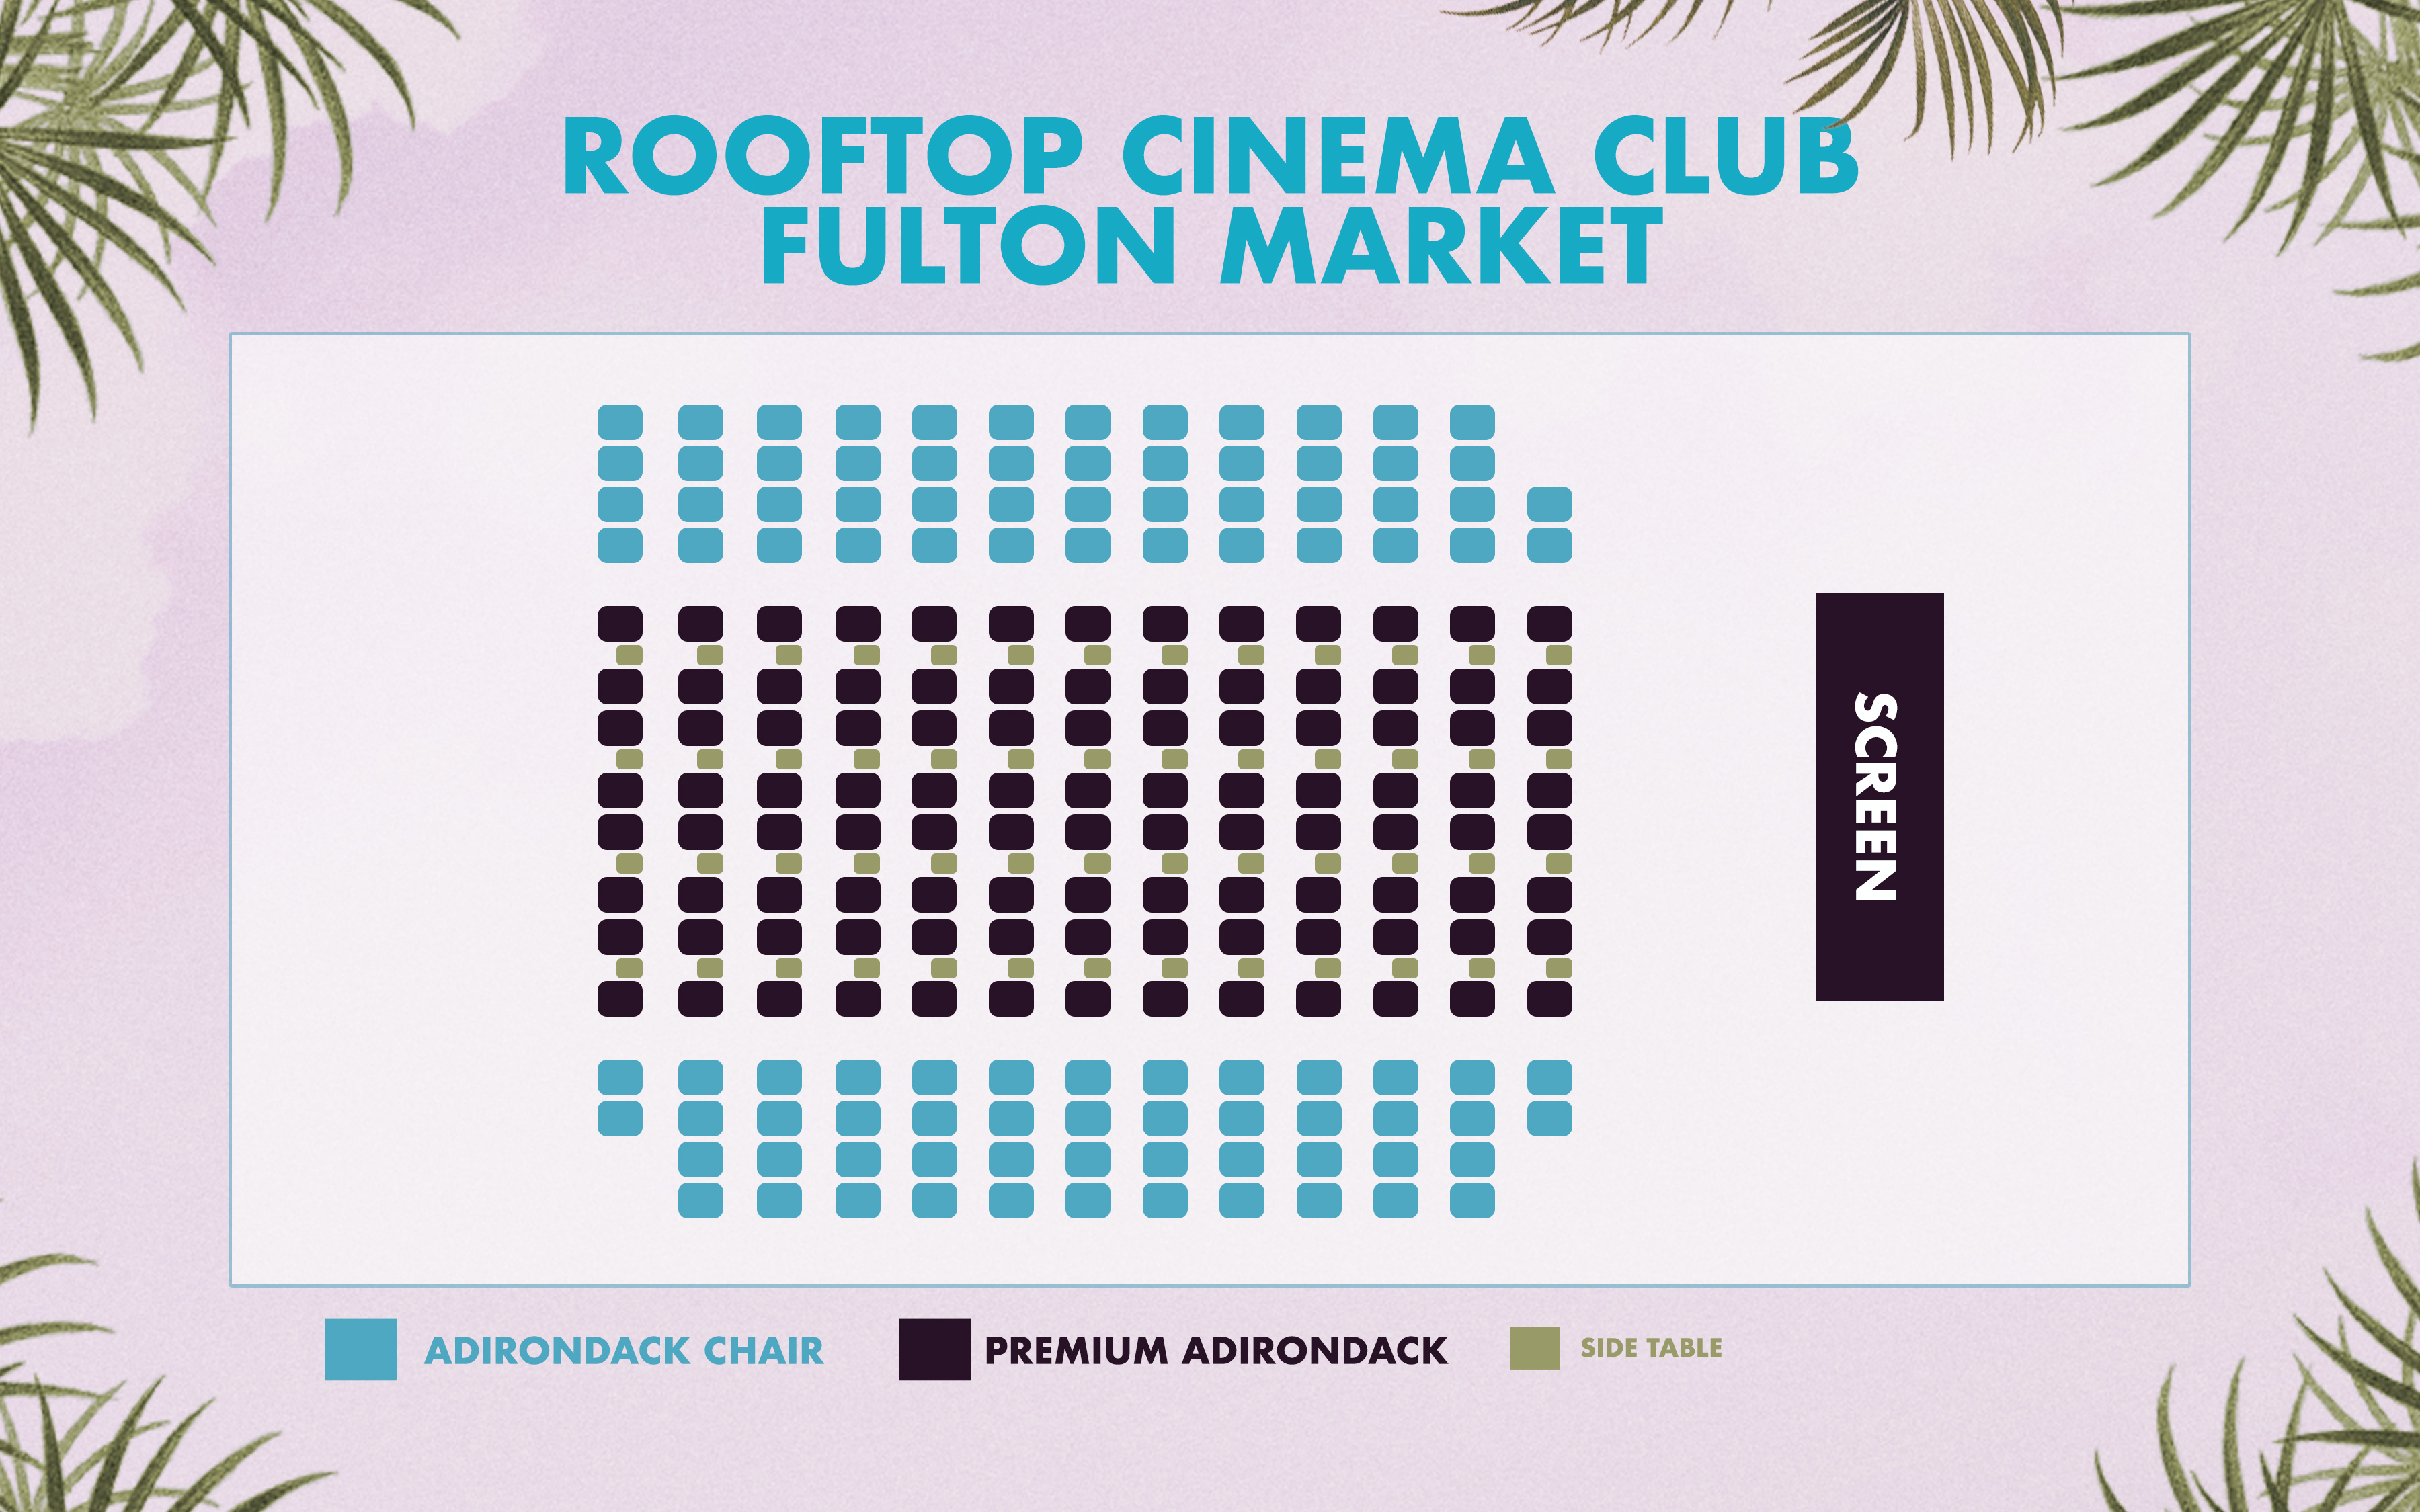 Rooftop Cinema Club Fulton Market Seating Layout